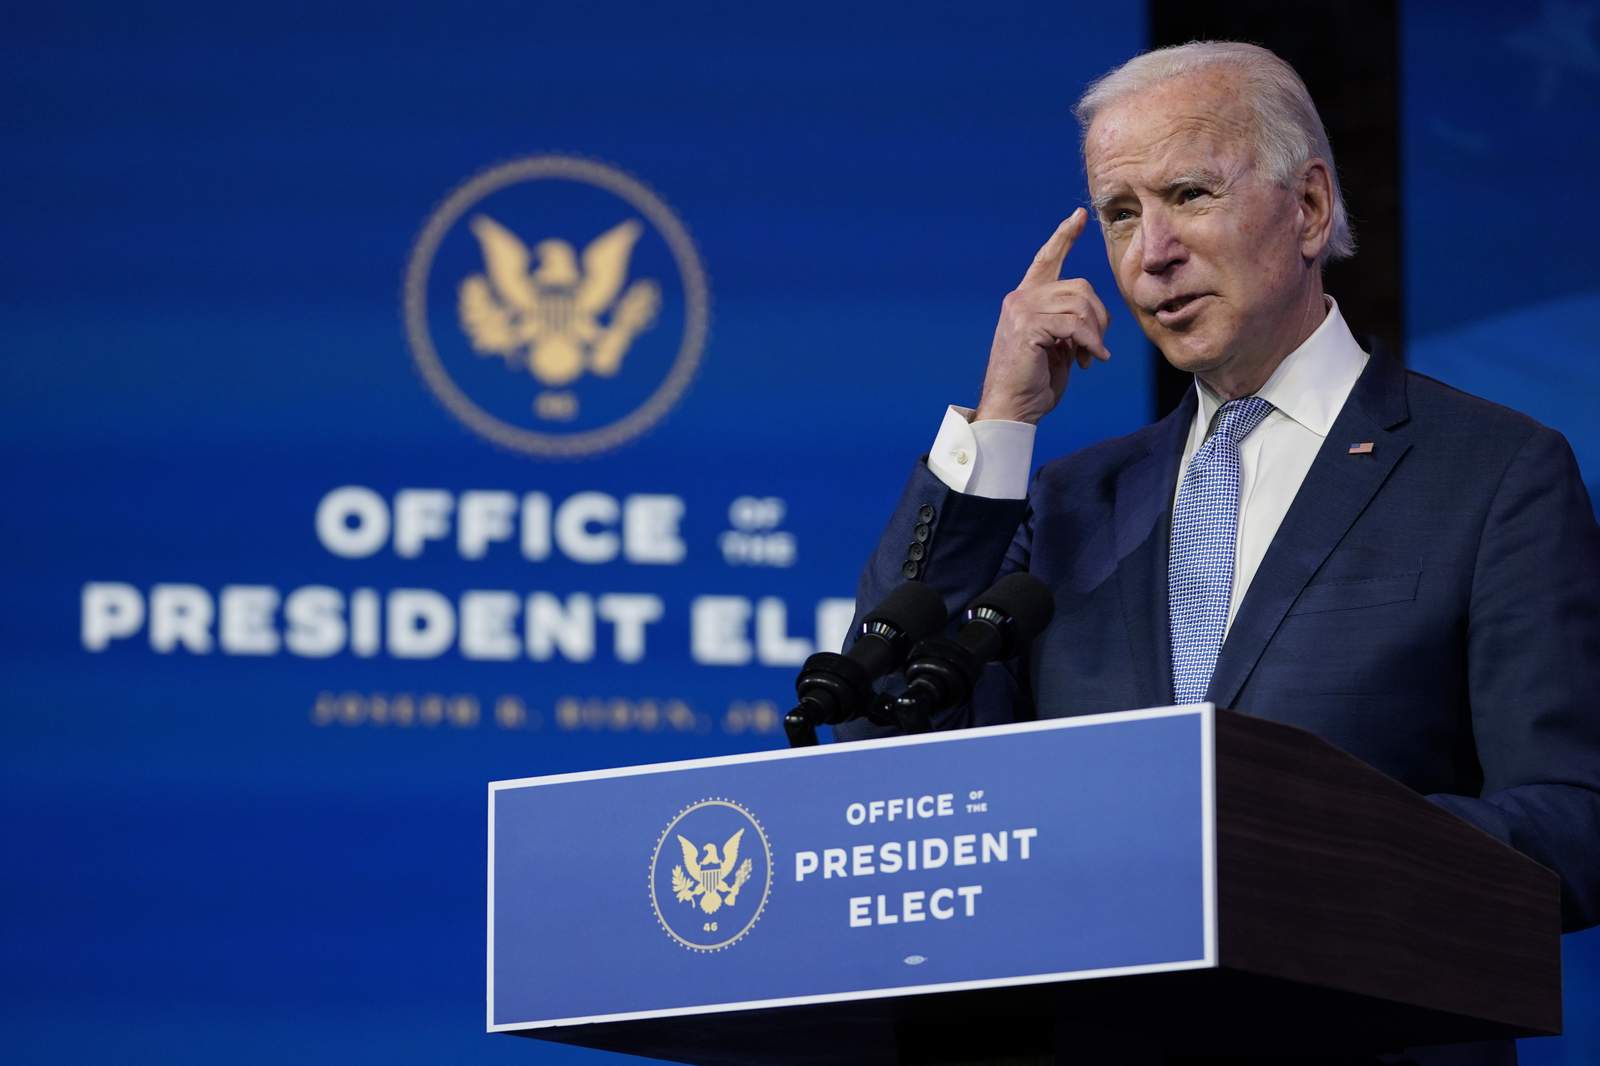 Biden urges restoring decency after ‘assault’ on democracy